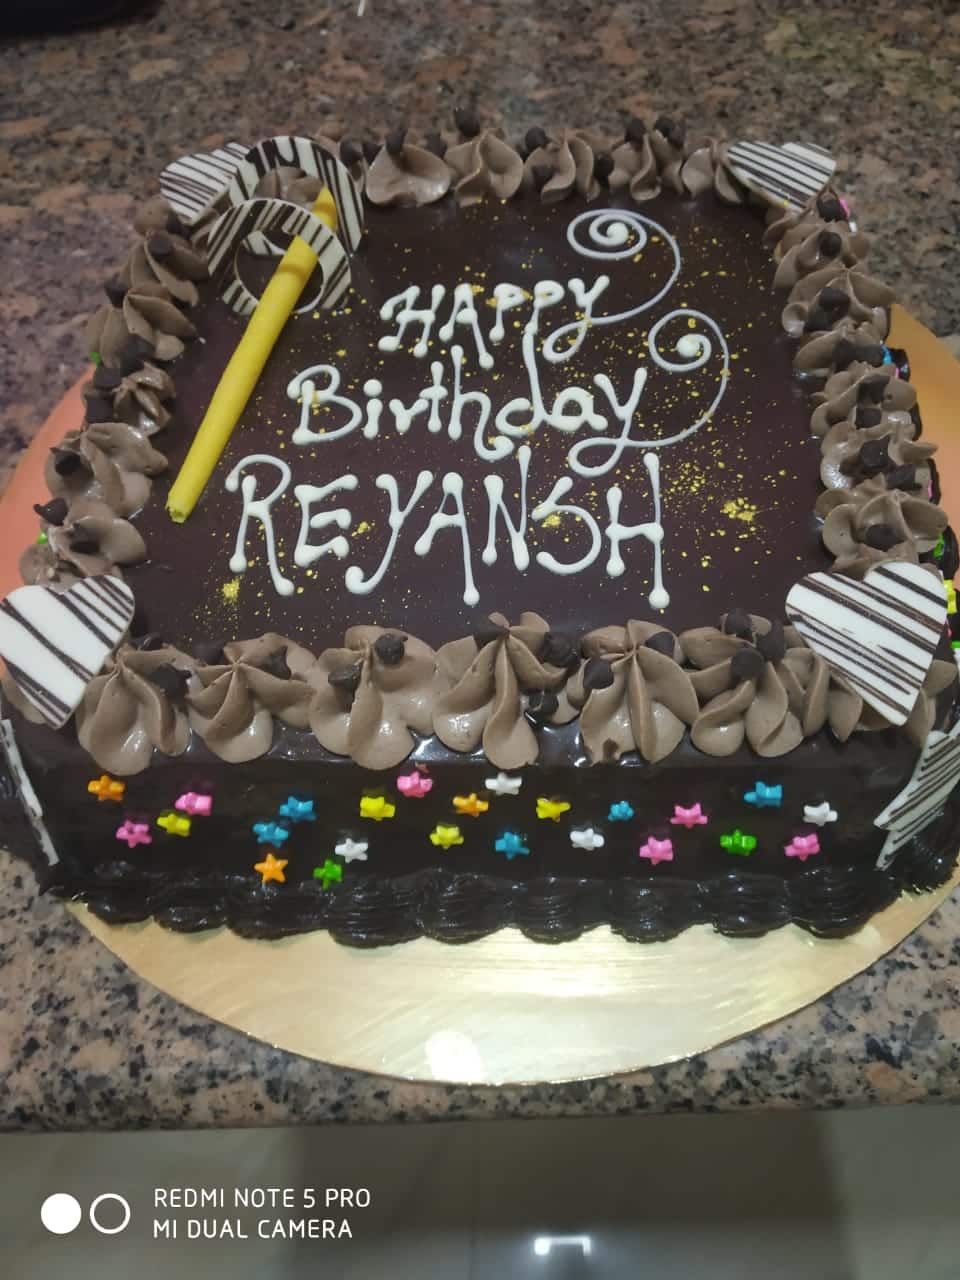 Flavoroso - Cake for Reyansh 5th birthday !! . . . . . . .... | Facebook